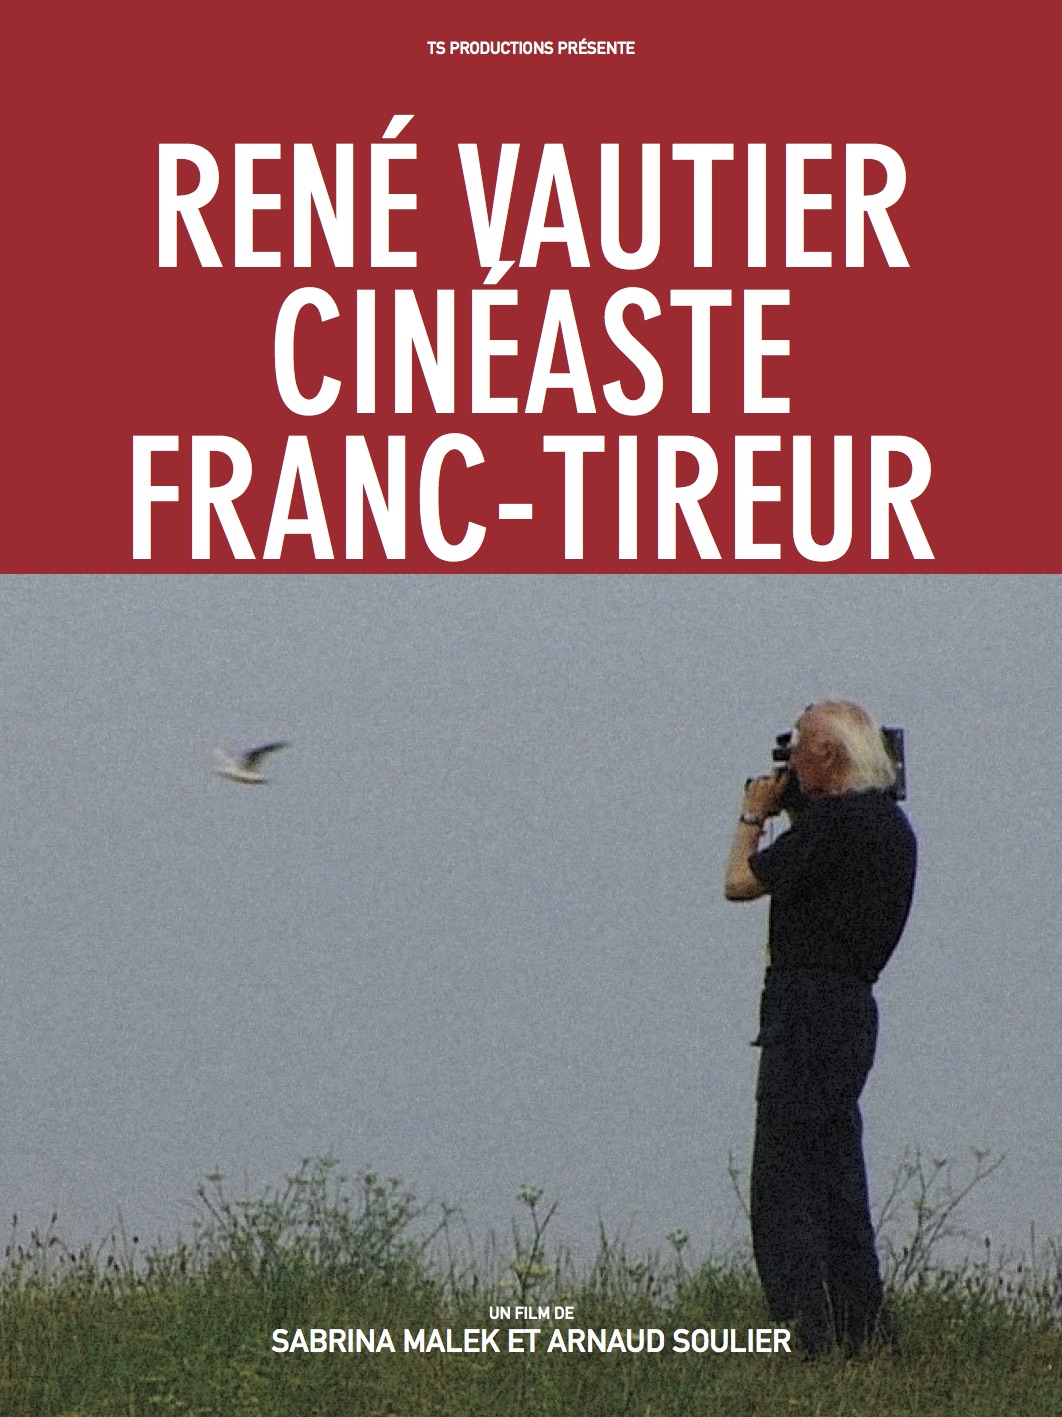 RENÉ VAUTIER, CINÉASTE FRANC-TIREUR - Sabrina Malek & Arnaud Soulier